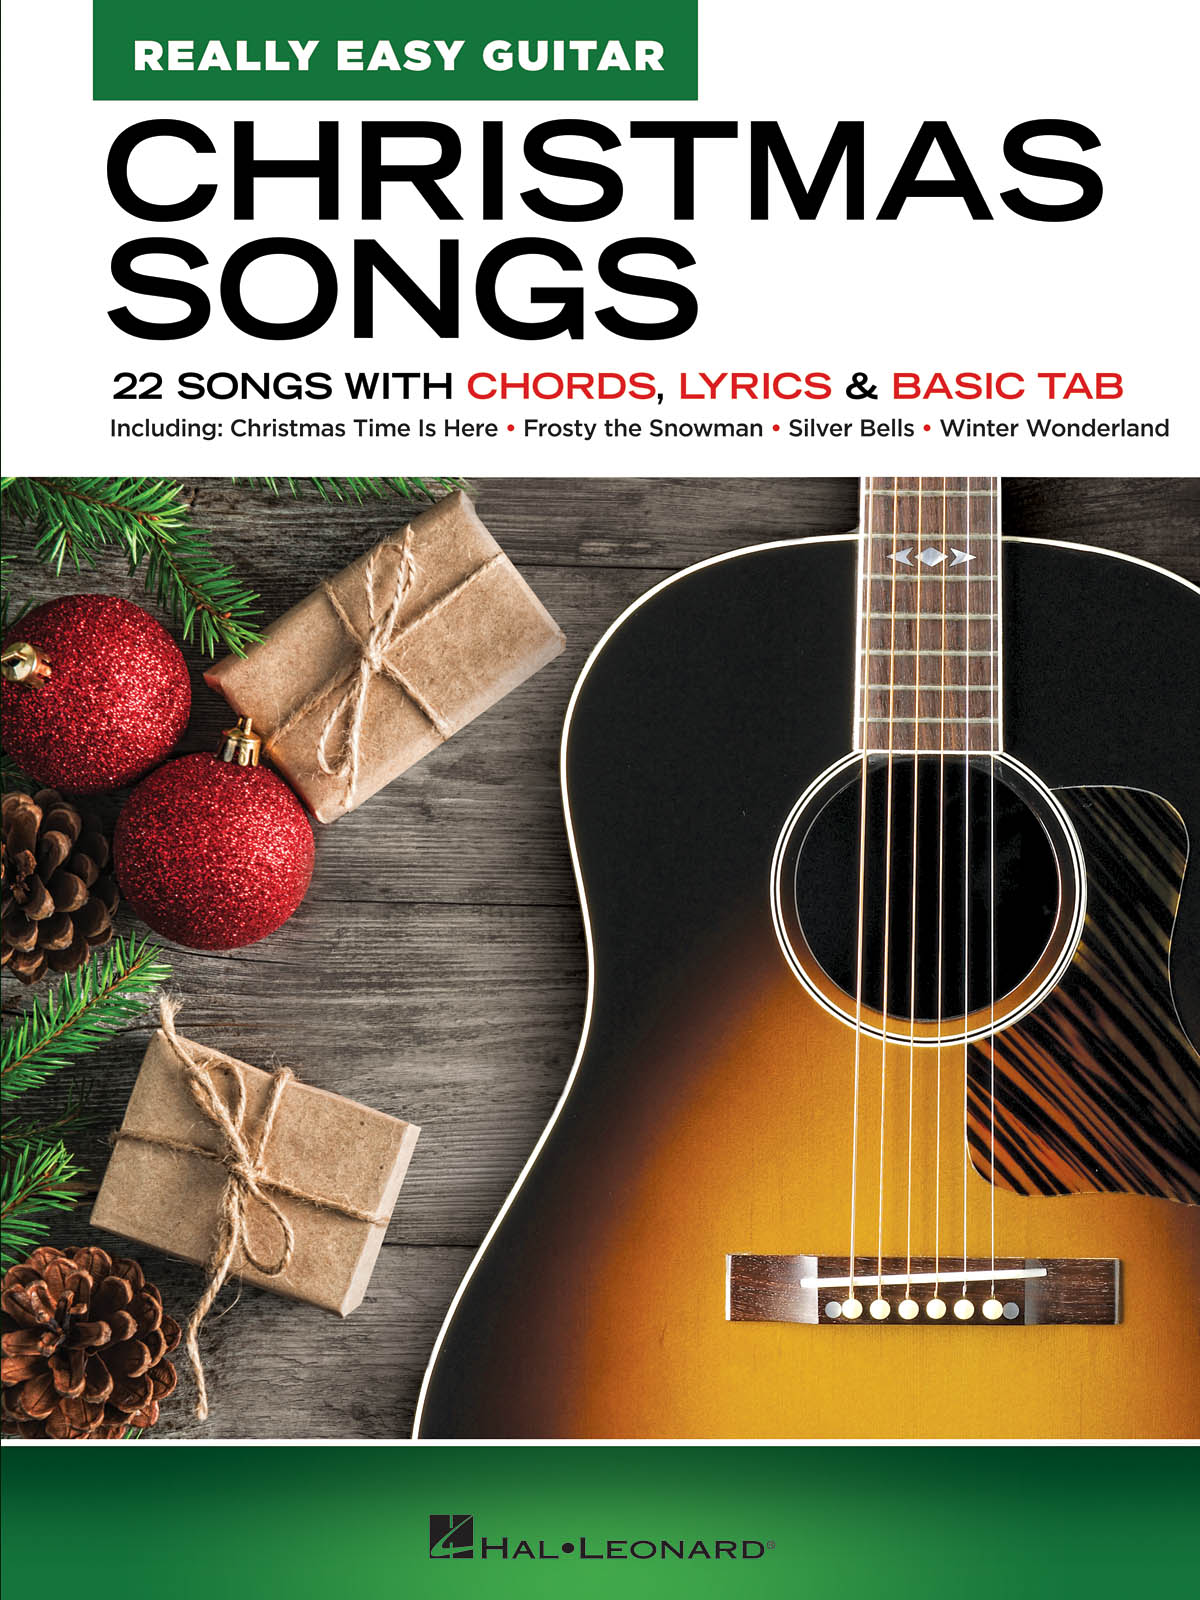 Image 1 of Christmas Songs – Really Easy Guitar Series - SKU# 49-294775 : Product Type Media : Elderly Instruments